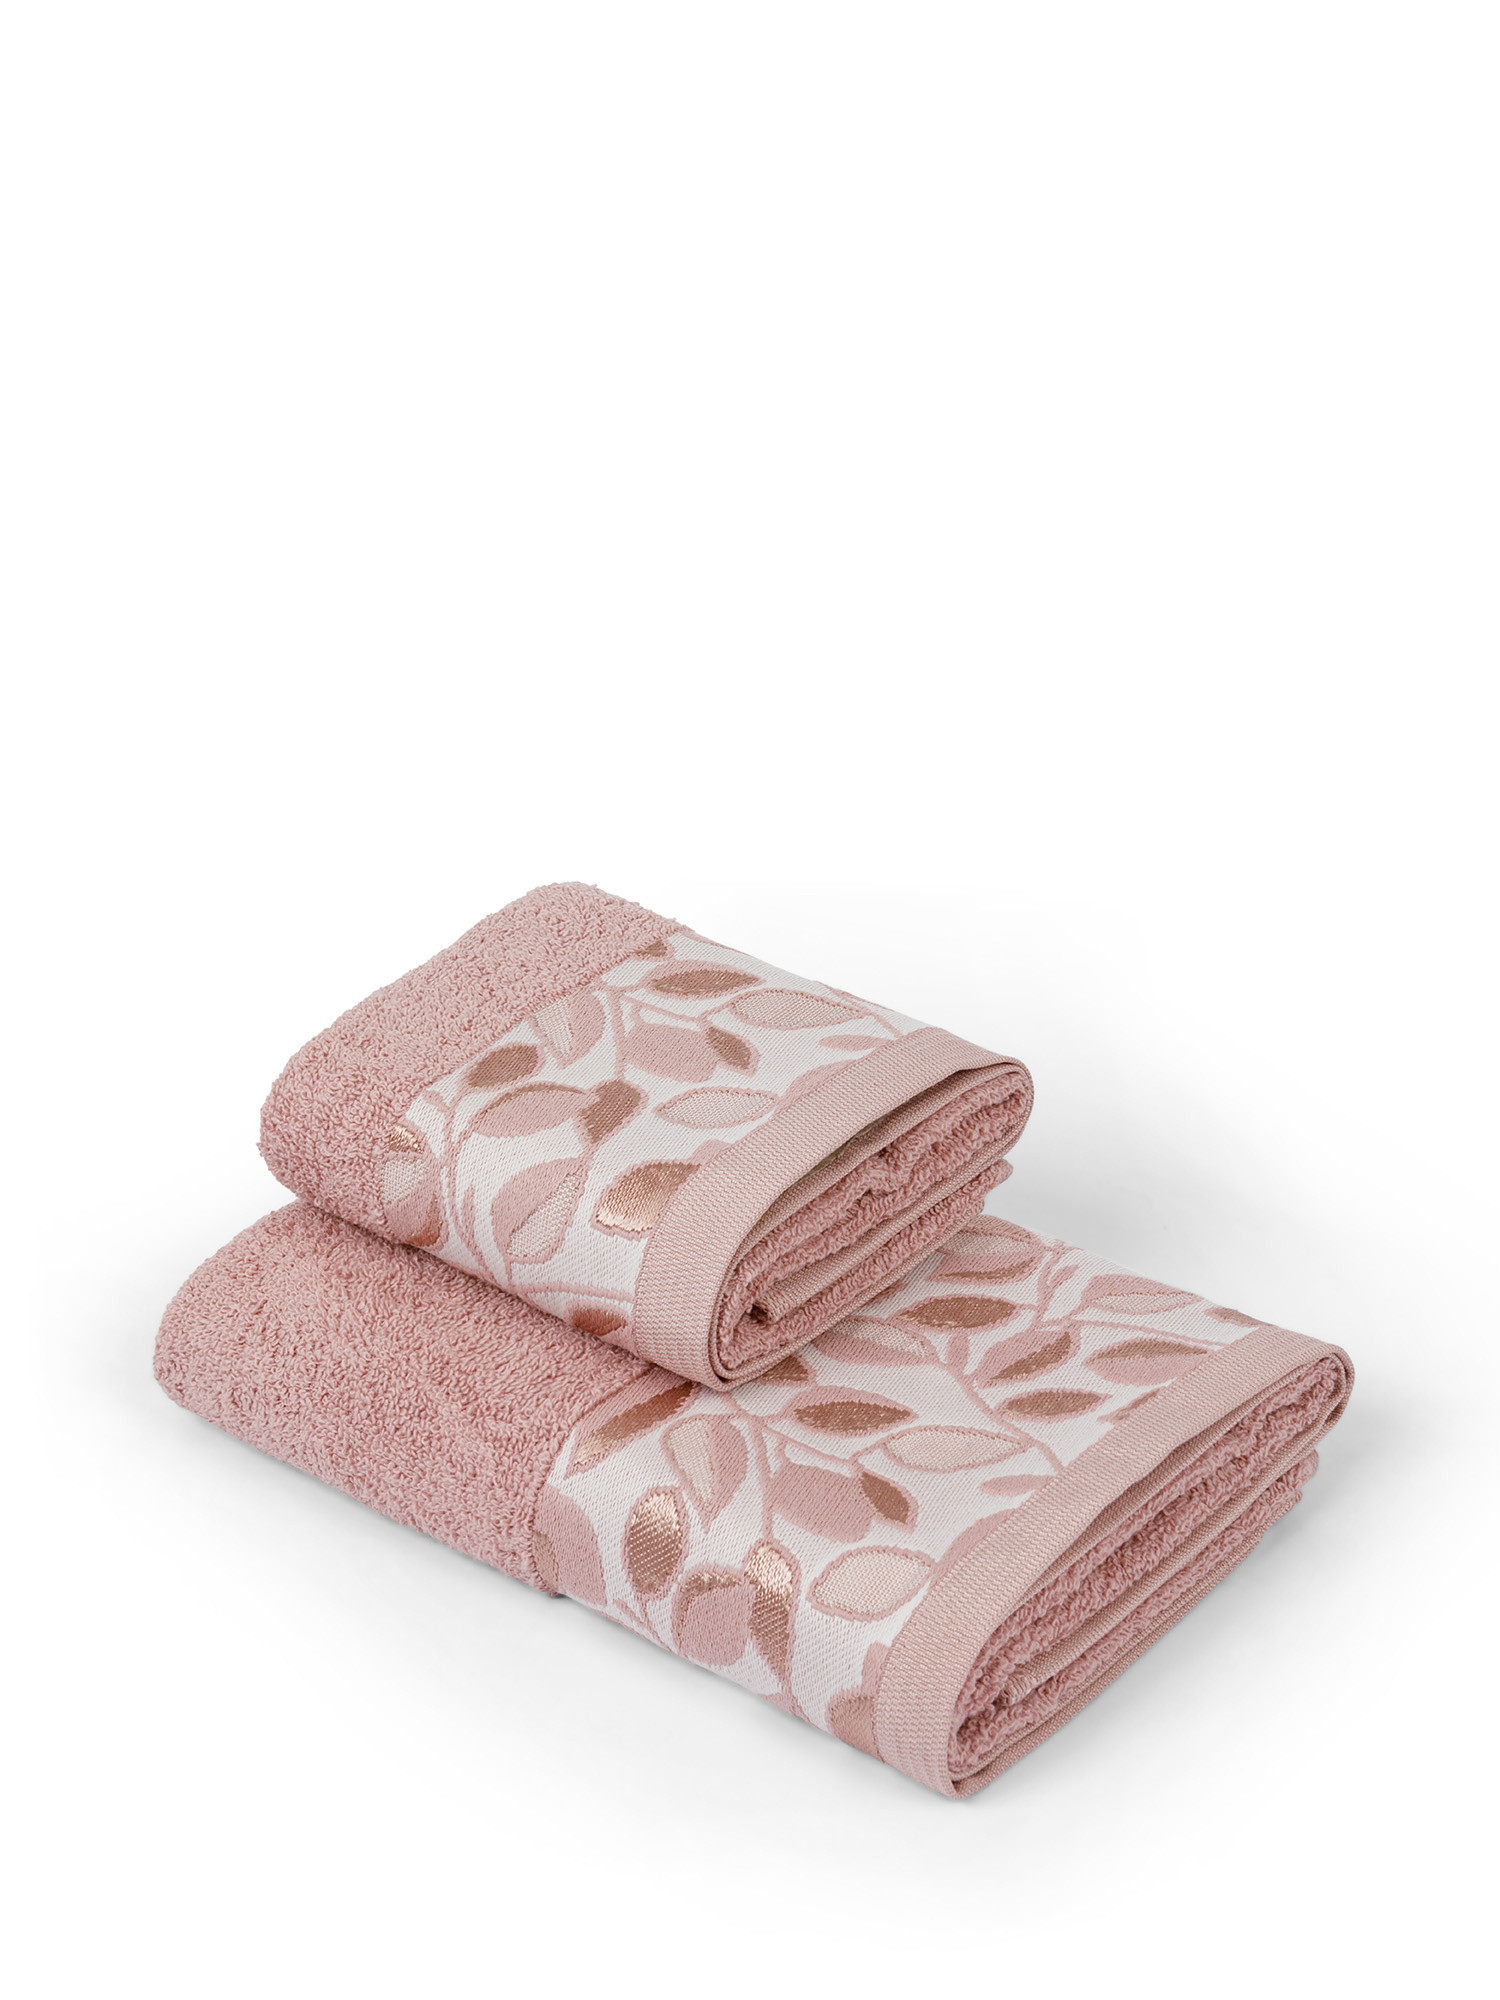 Asciugamano in spugna di puro cotone motivo foglie, Rosa, large image number 0